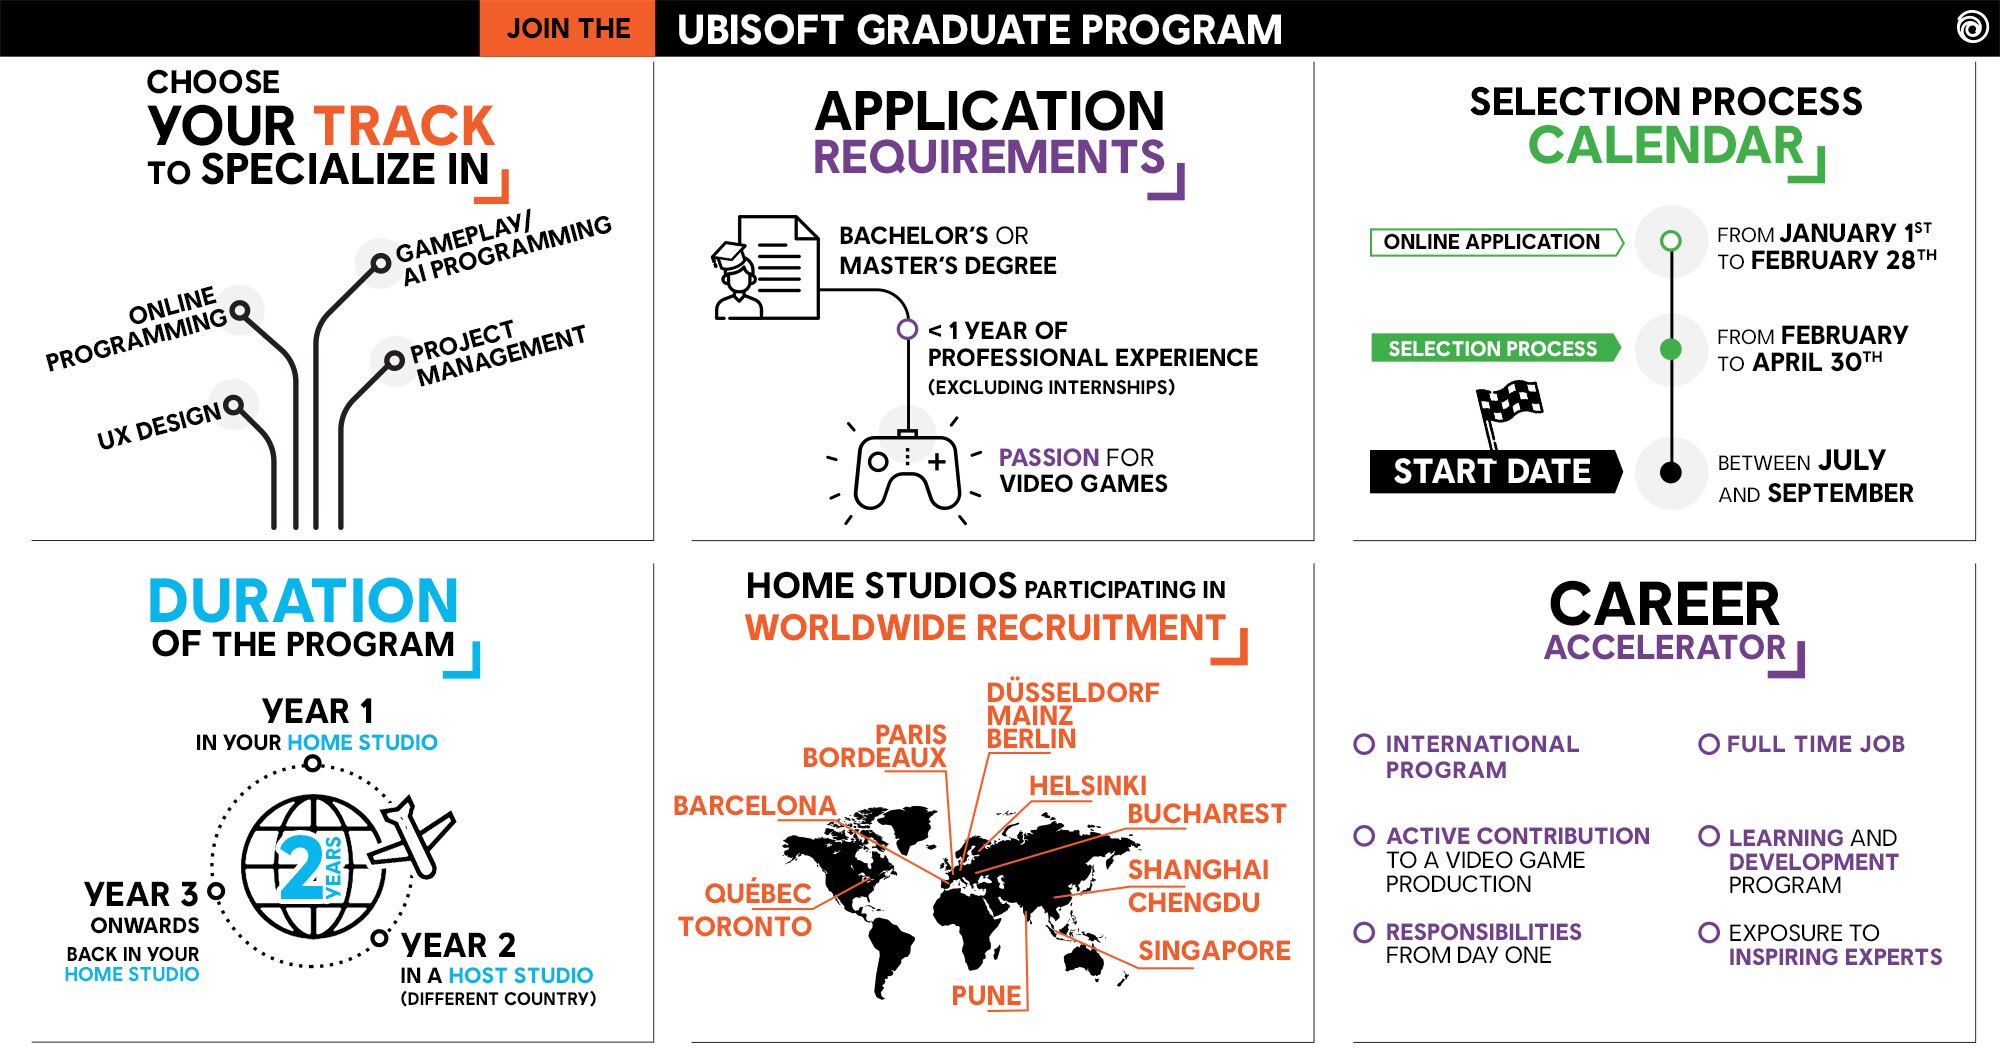 [UN] [News] Ubisoft Graduate Program: Essential Tips from Current Ubigrads! - info